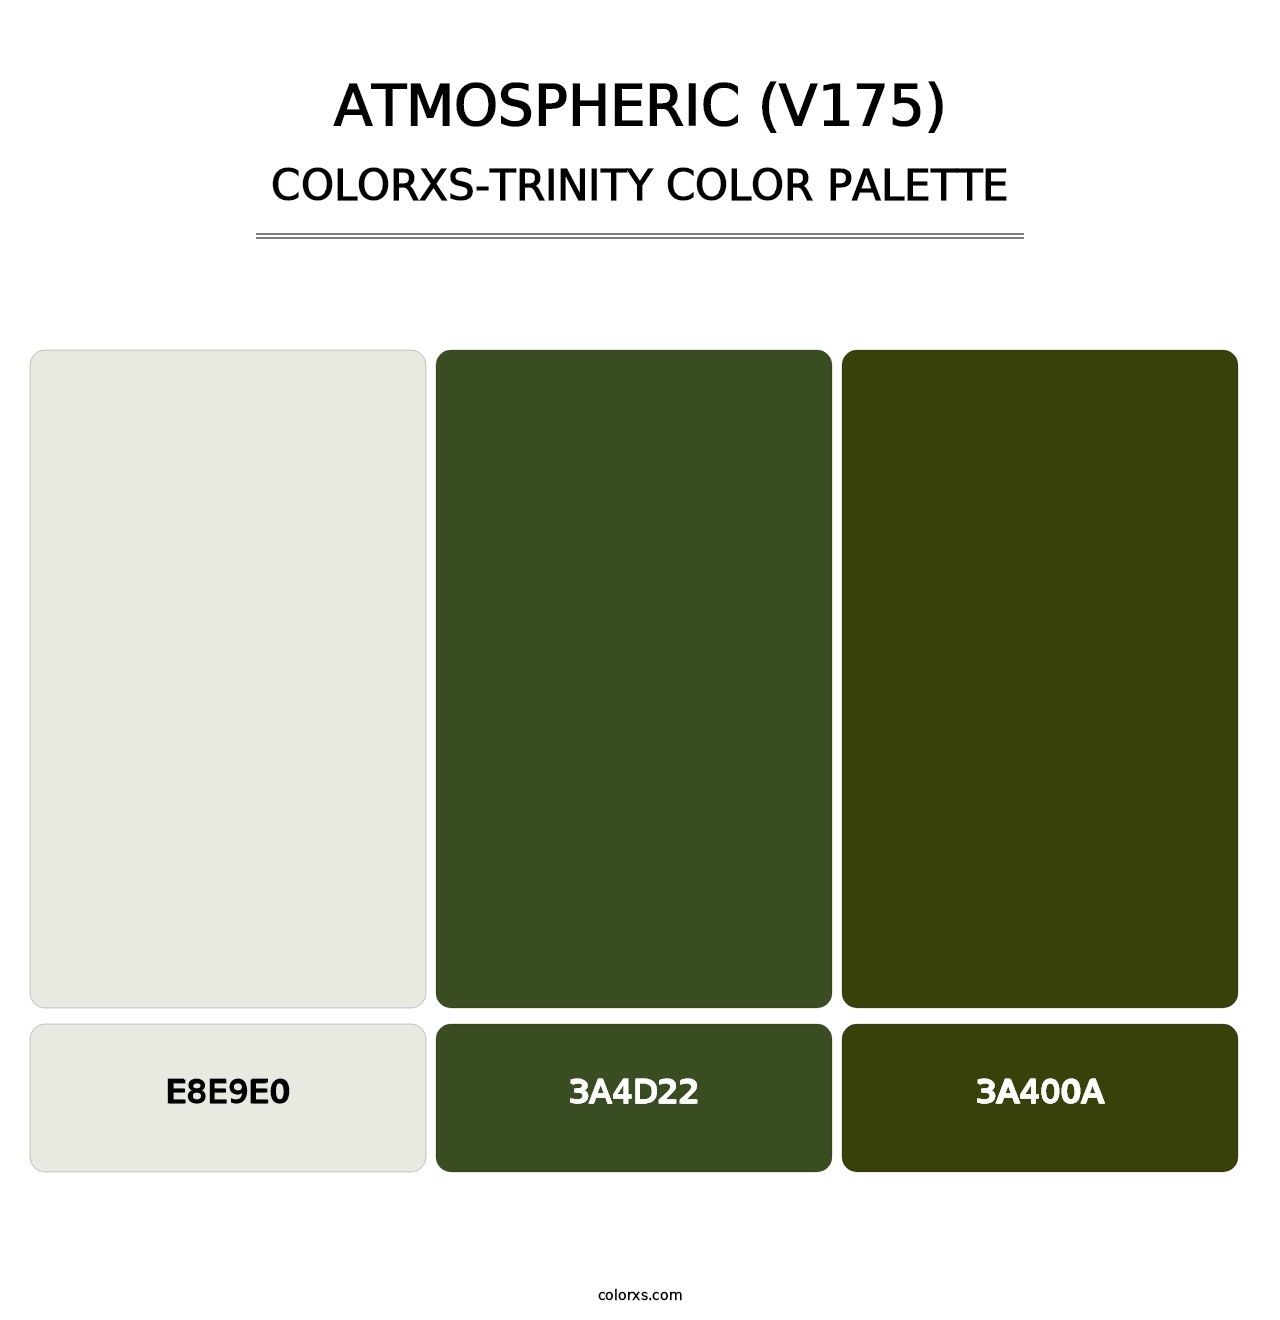 Atmospheric (V175) - Colorxs Trinity Palette